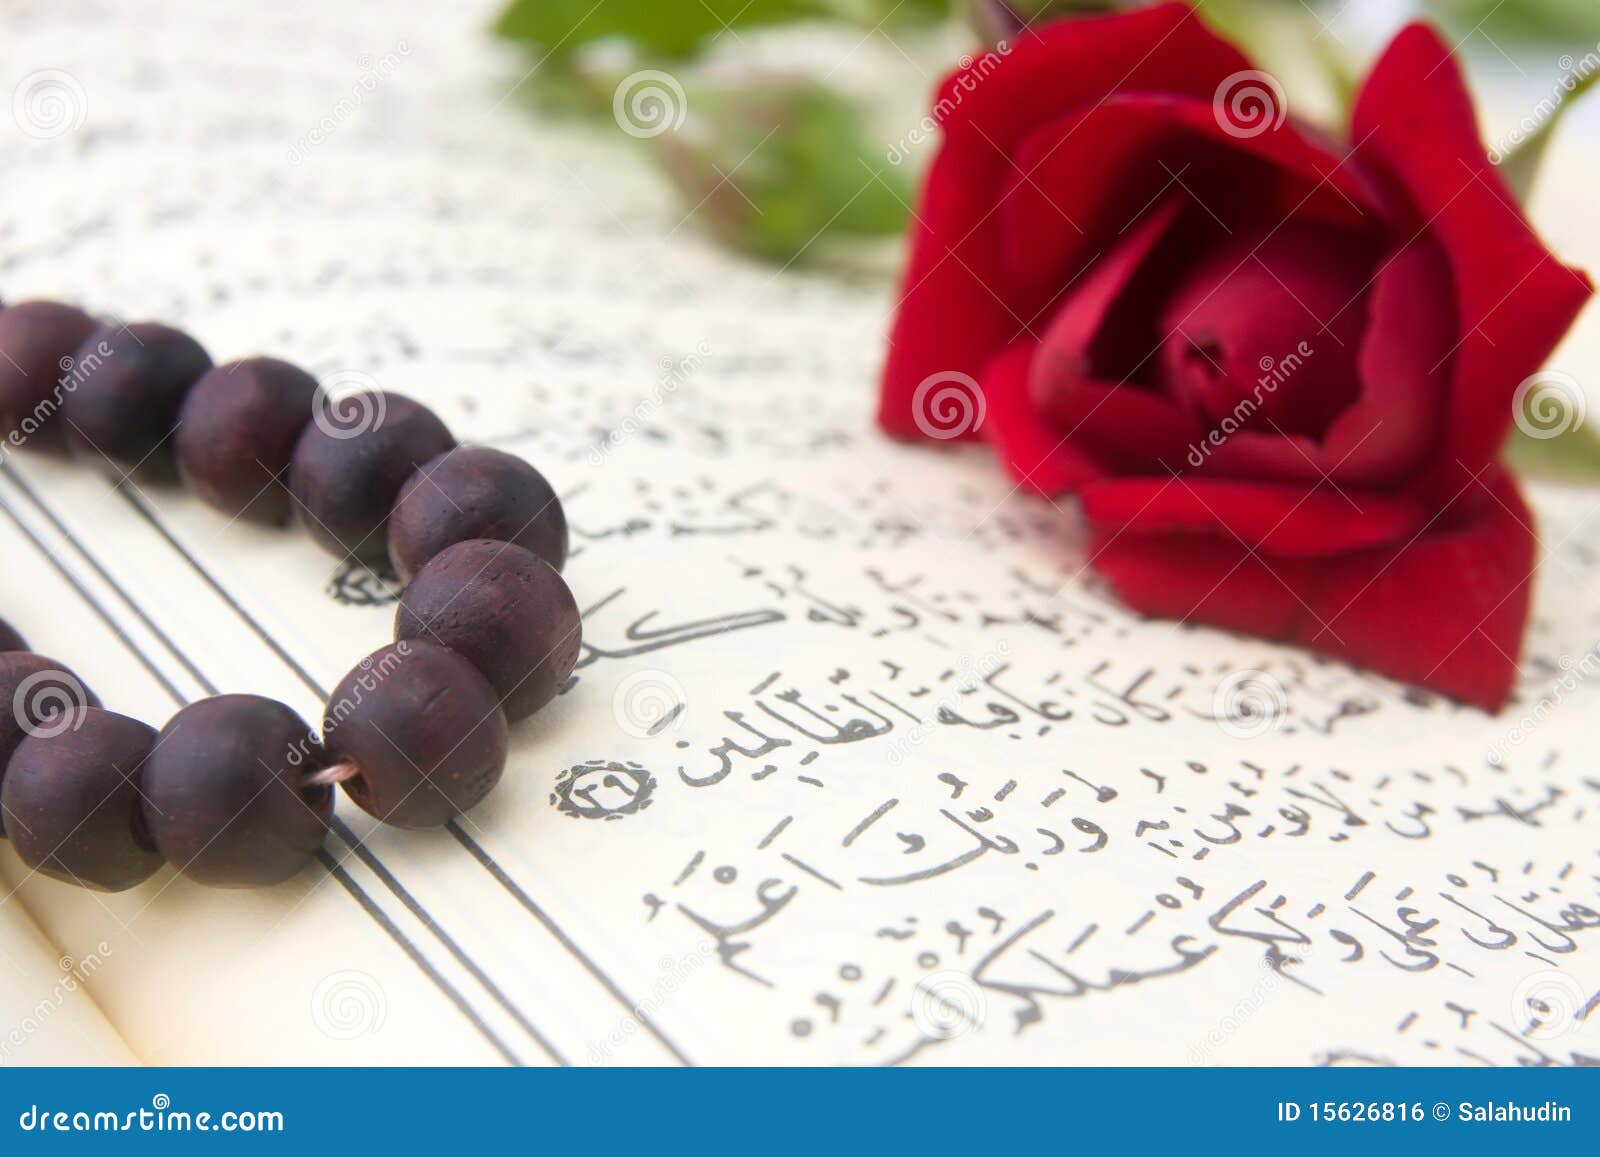 Koran and rose flower stock photo. Image of koran, religion - 15626816